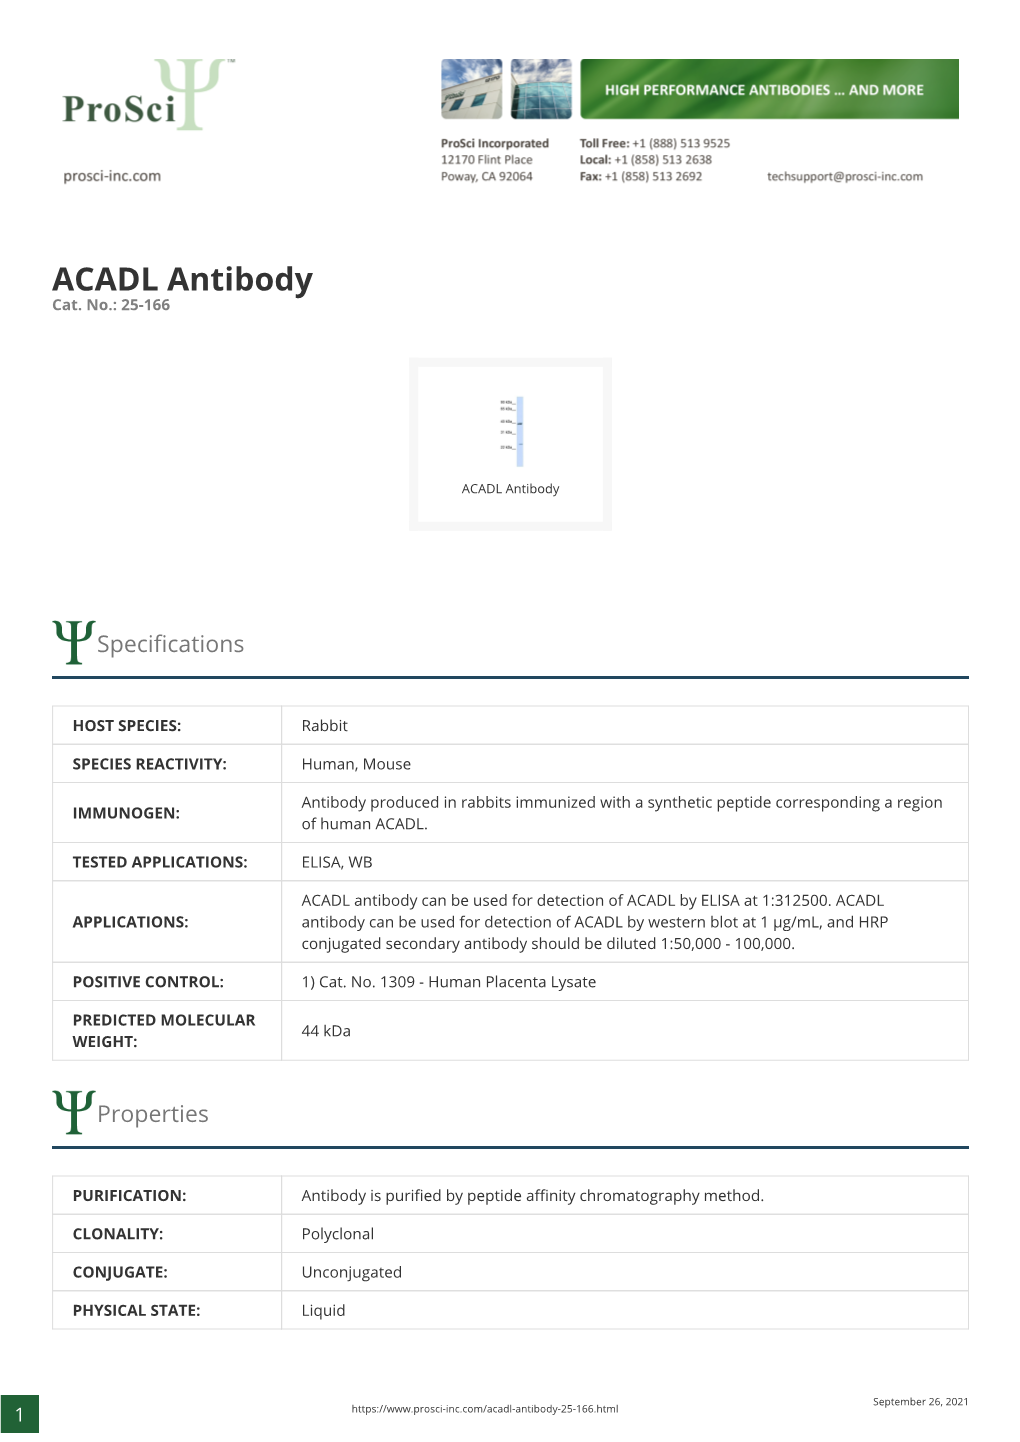 ACADL Antibody Cat